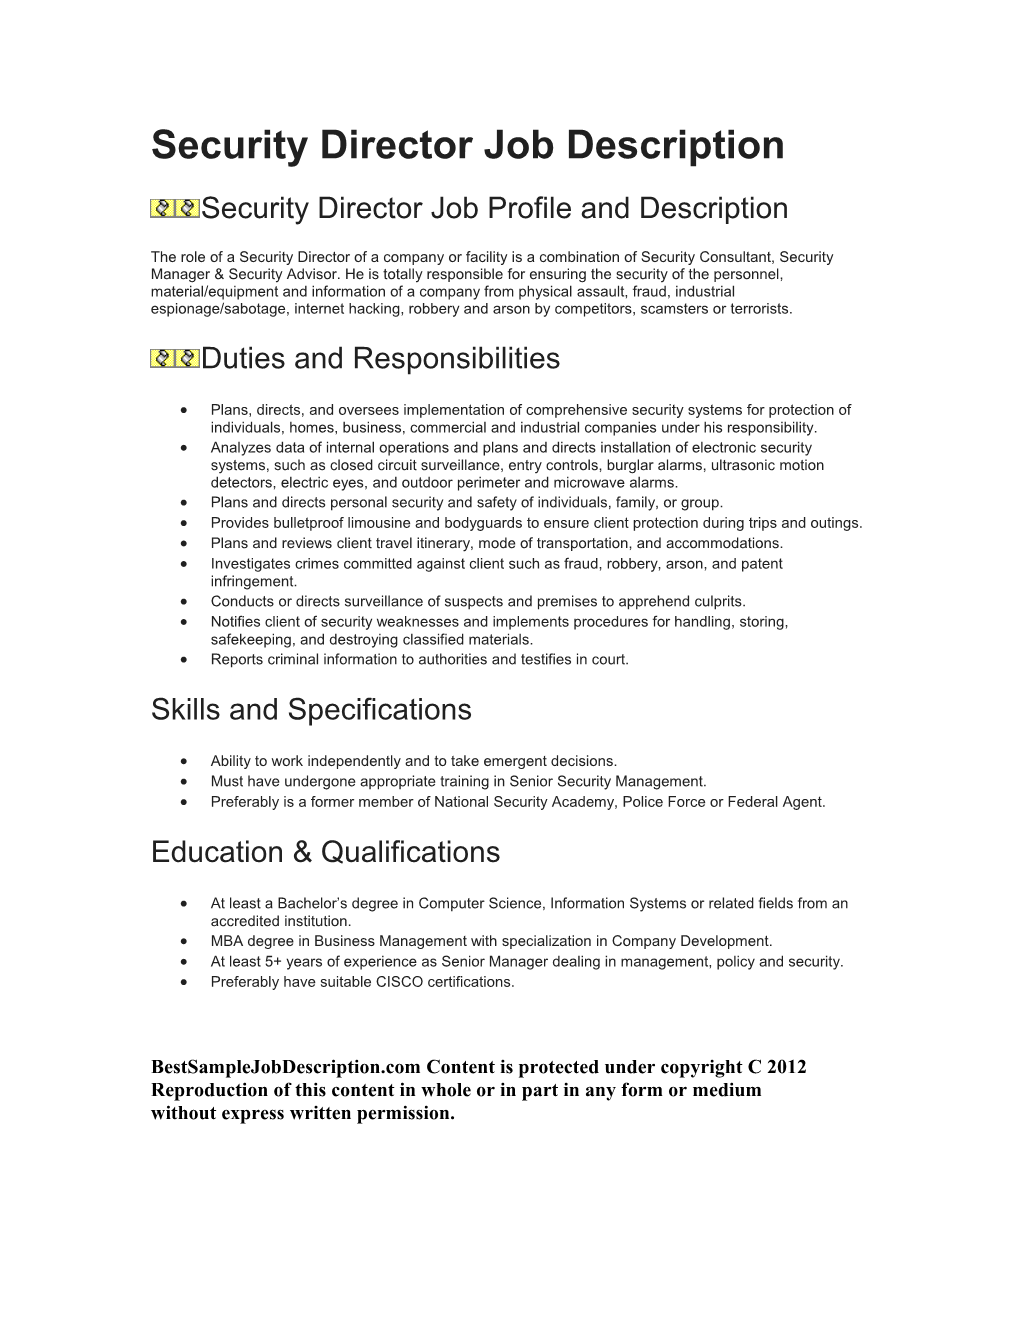 Security Director Job Description